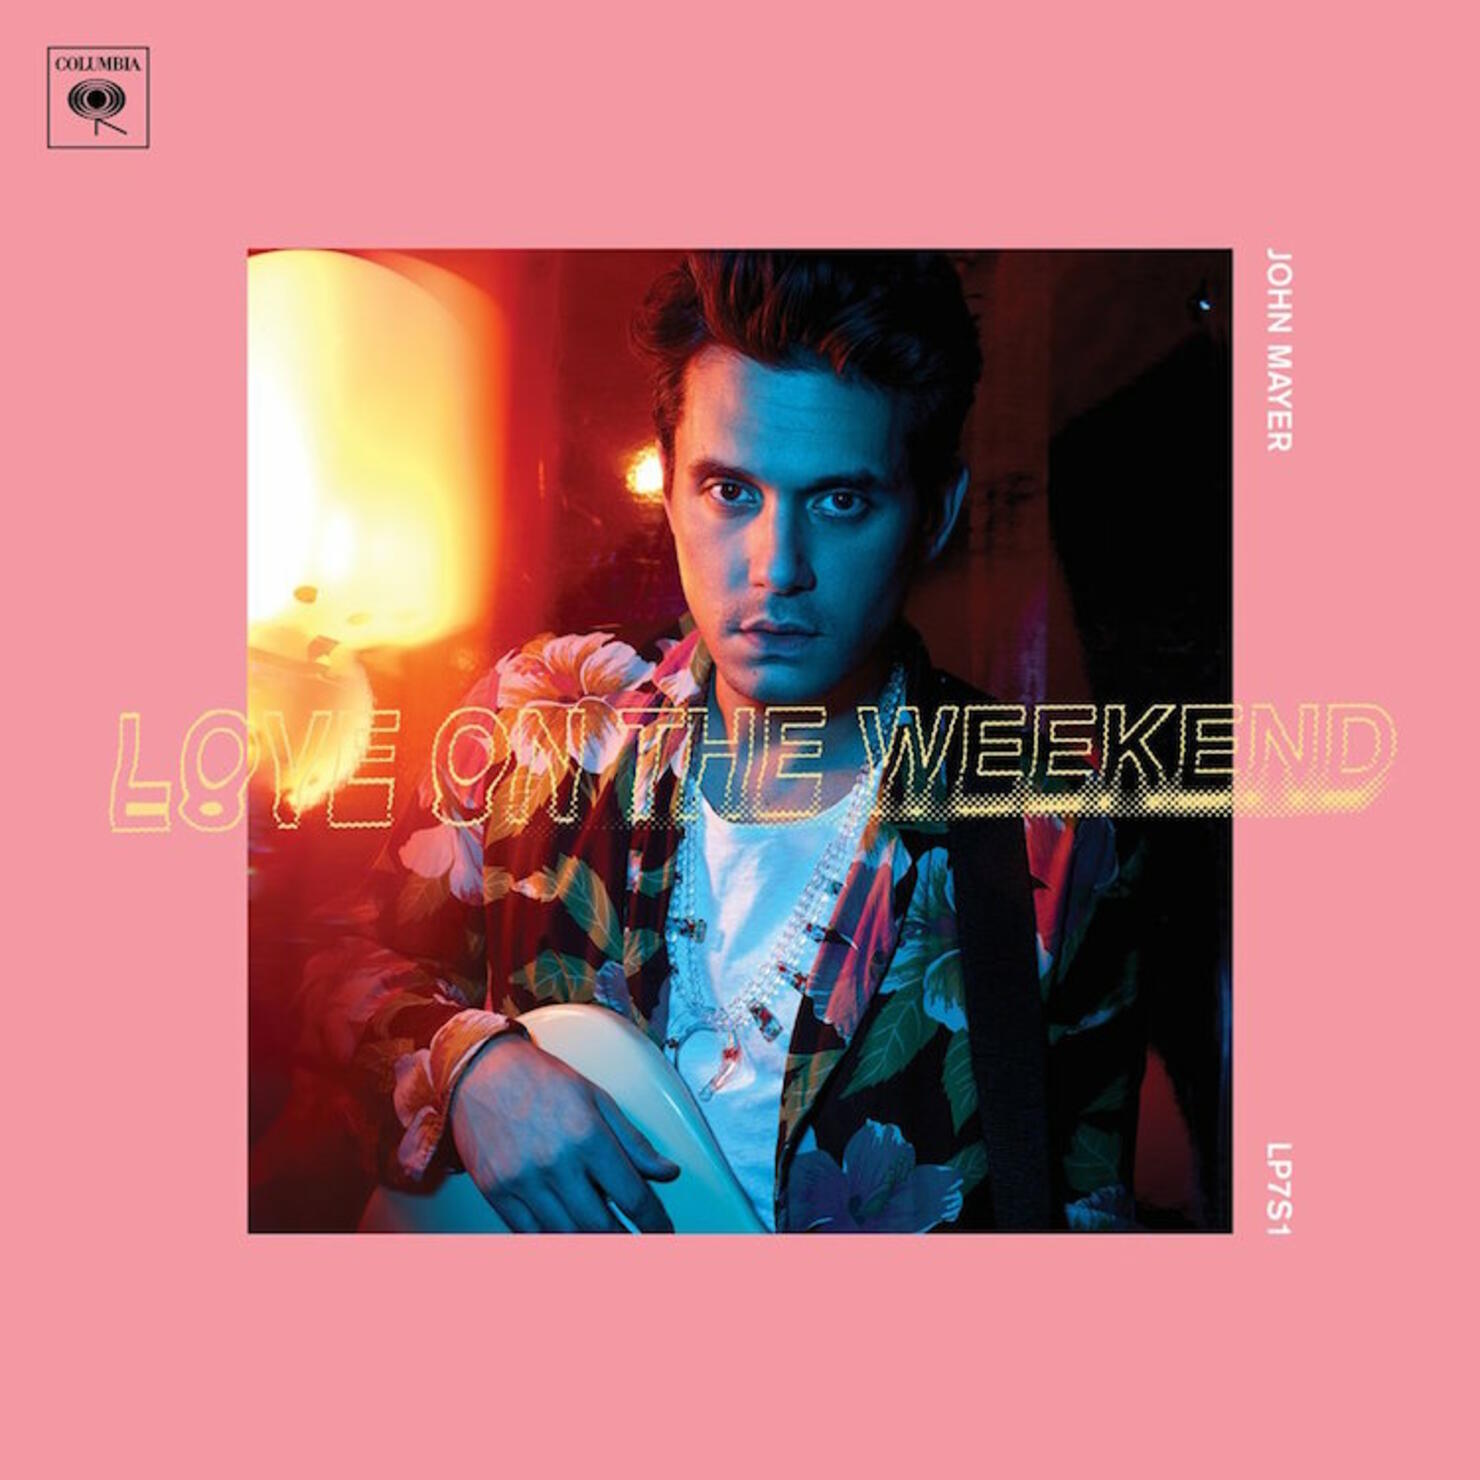 John Mayer - 'Love on the Weekend' Album Art Cover